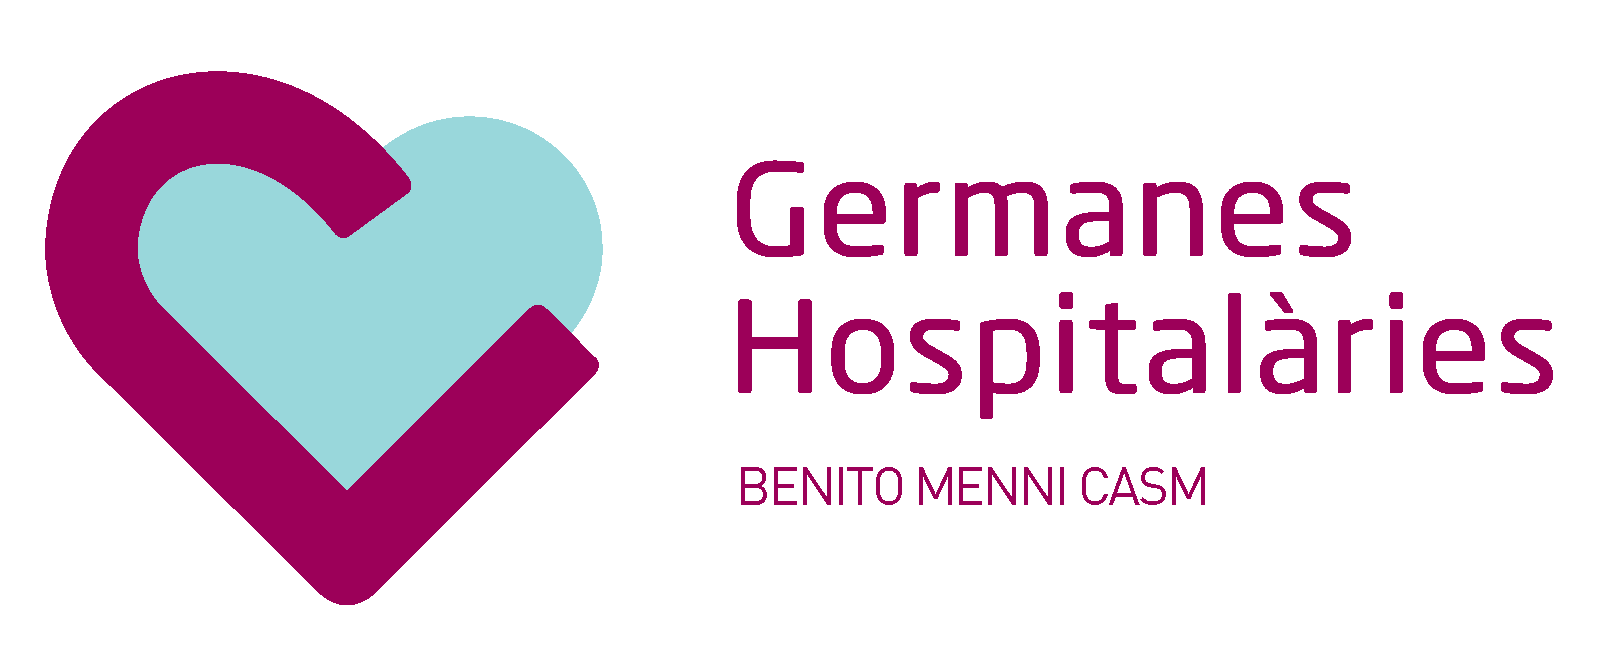 germanes hospitalaries logo